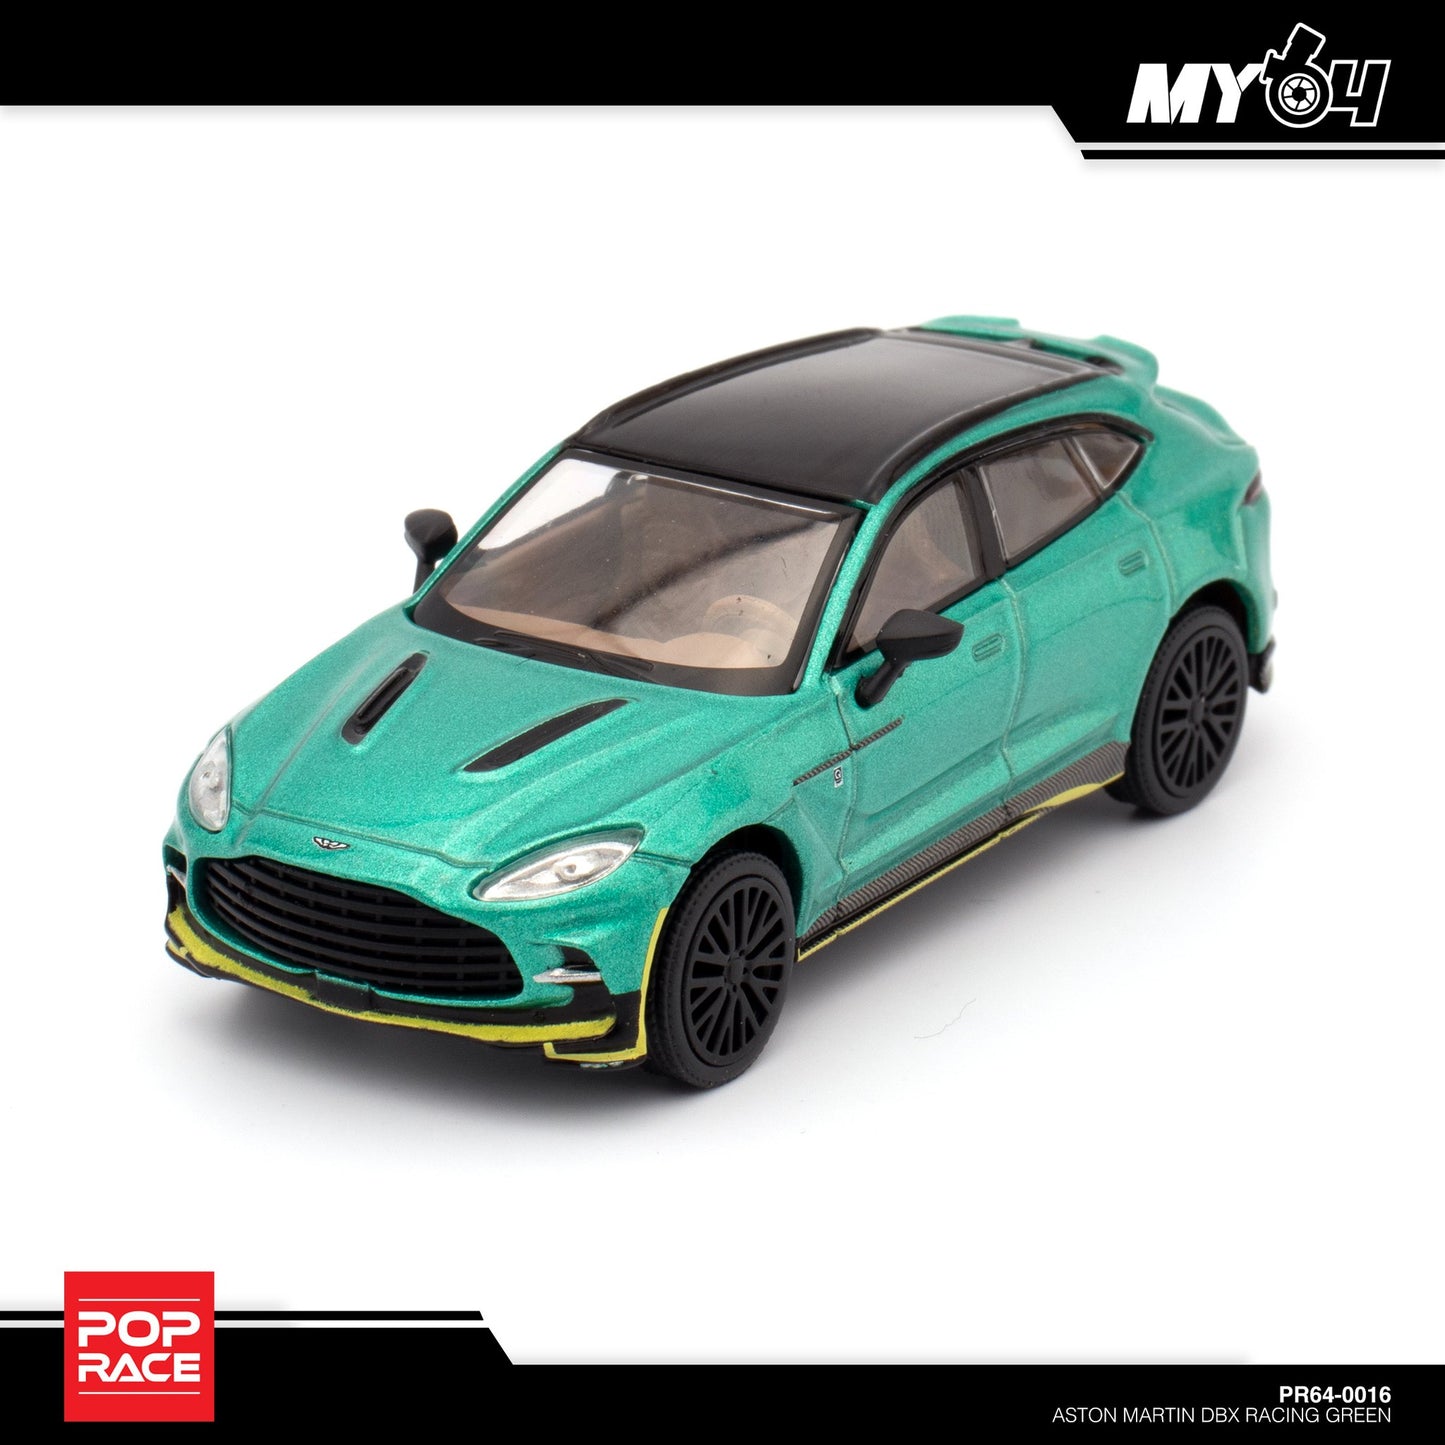 [Pop Race] Aston Martin DBX Racing - Green